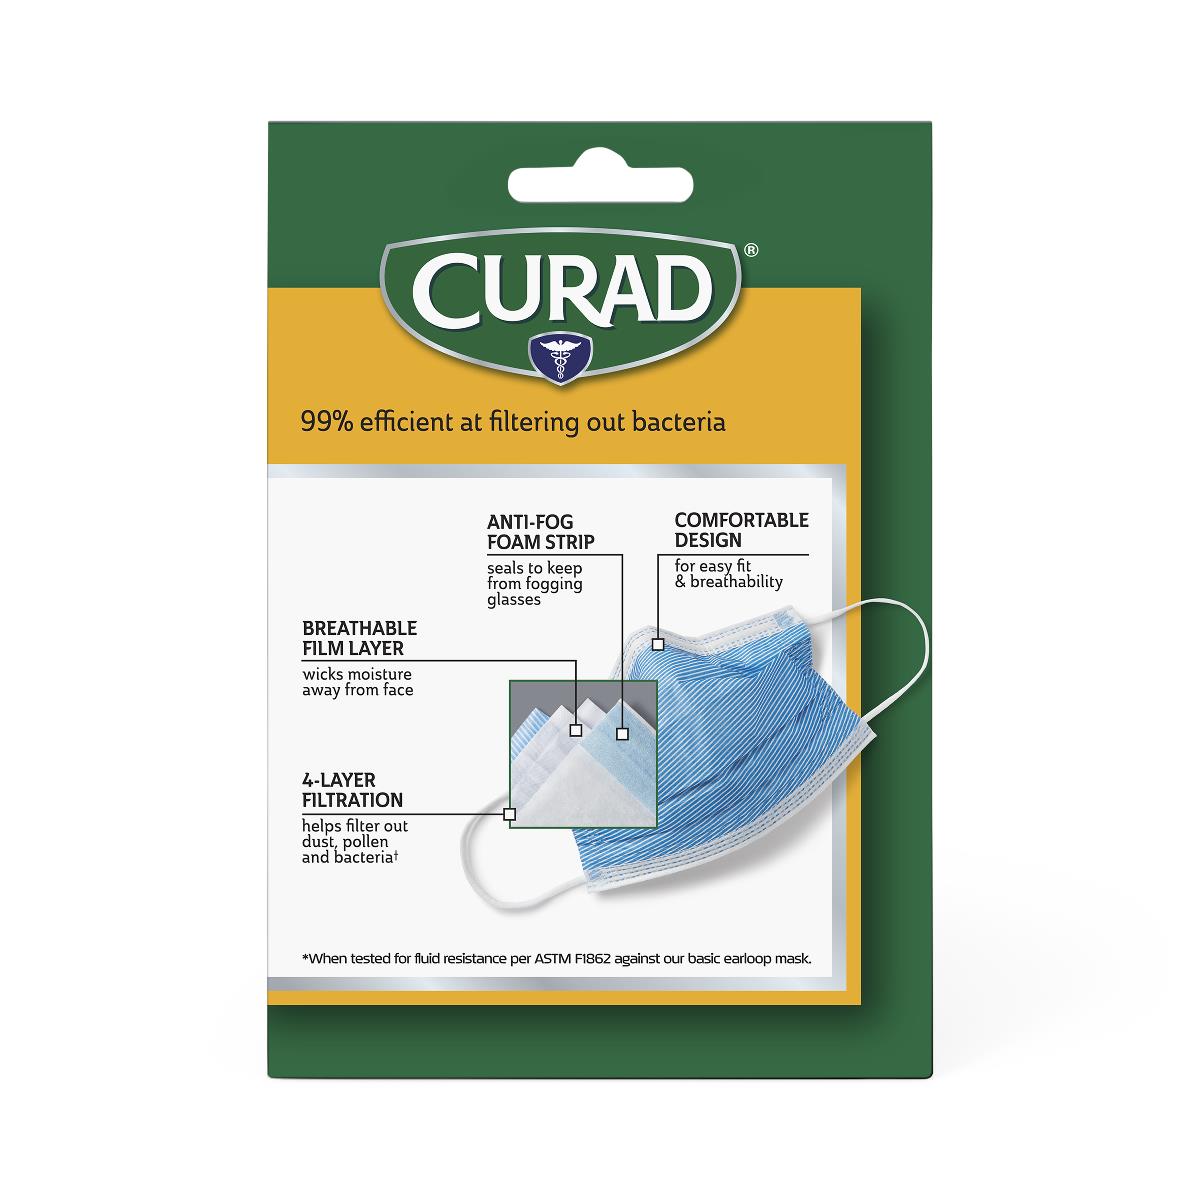 CURAD Germ Shield Medical-Grade Face Masks with Ear Loops